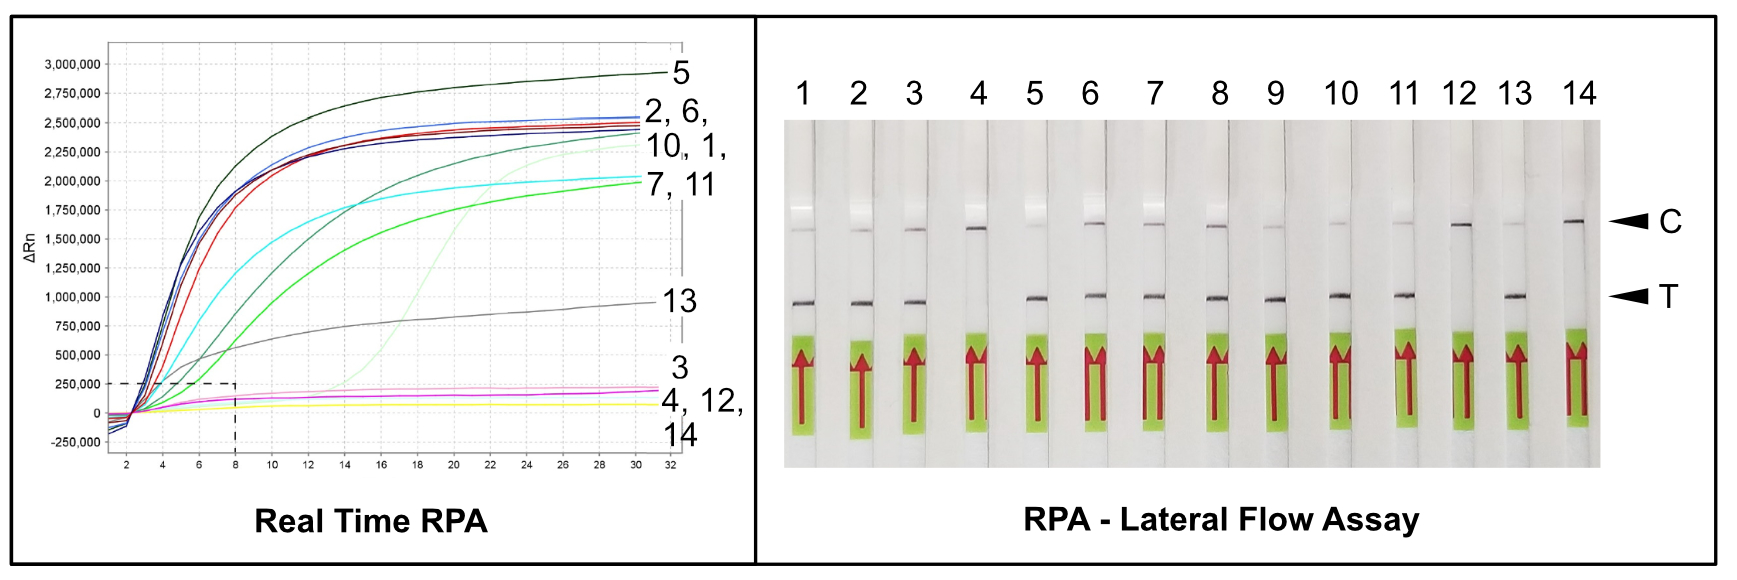 RPA-Lateral Flow Assay - Detection of plant pathogen M. hapla